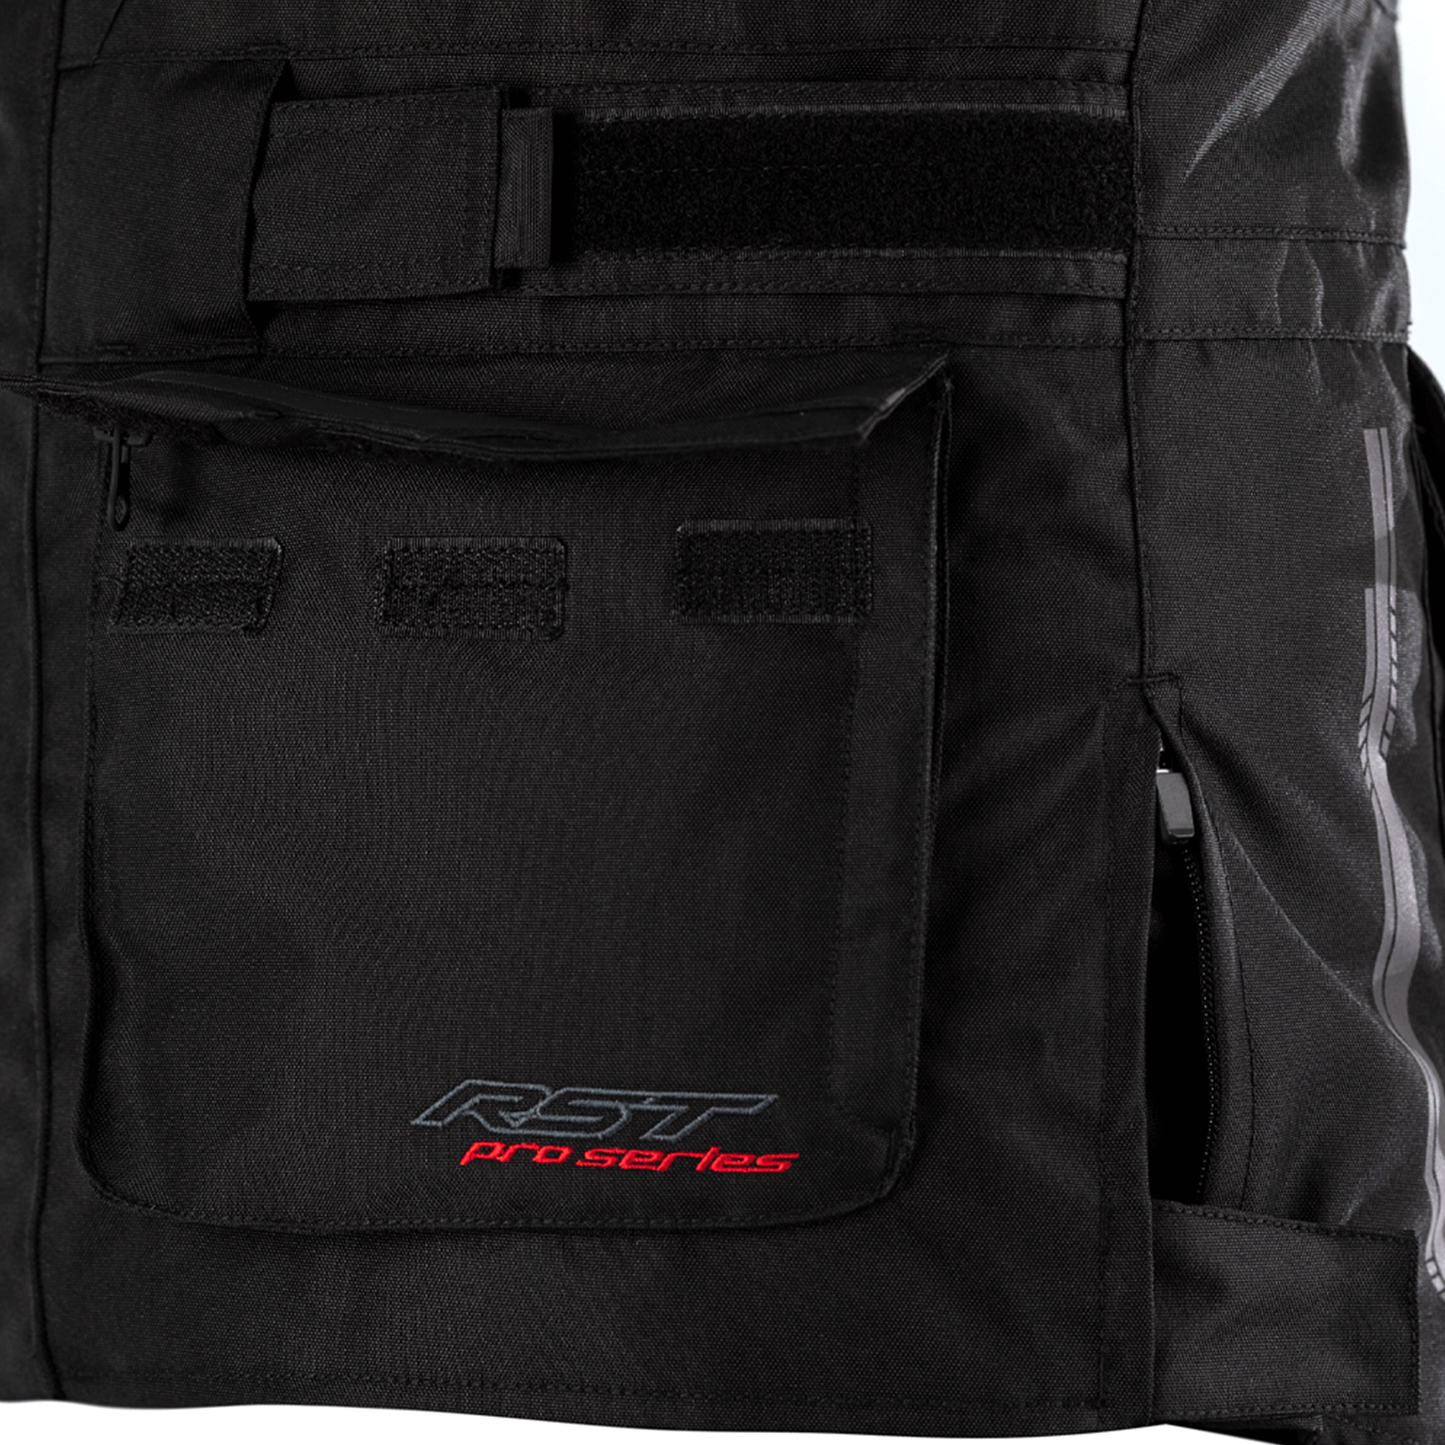 RST Paragon 6 Airbag (CE) Men's Textile Jacket - Black - (2561)